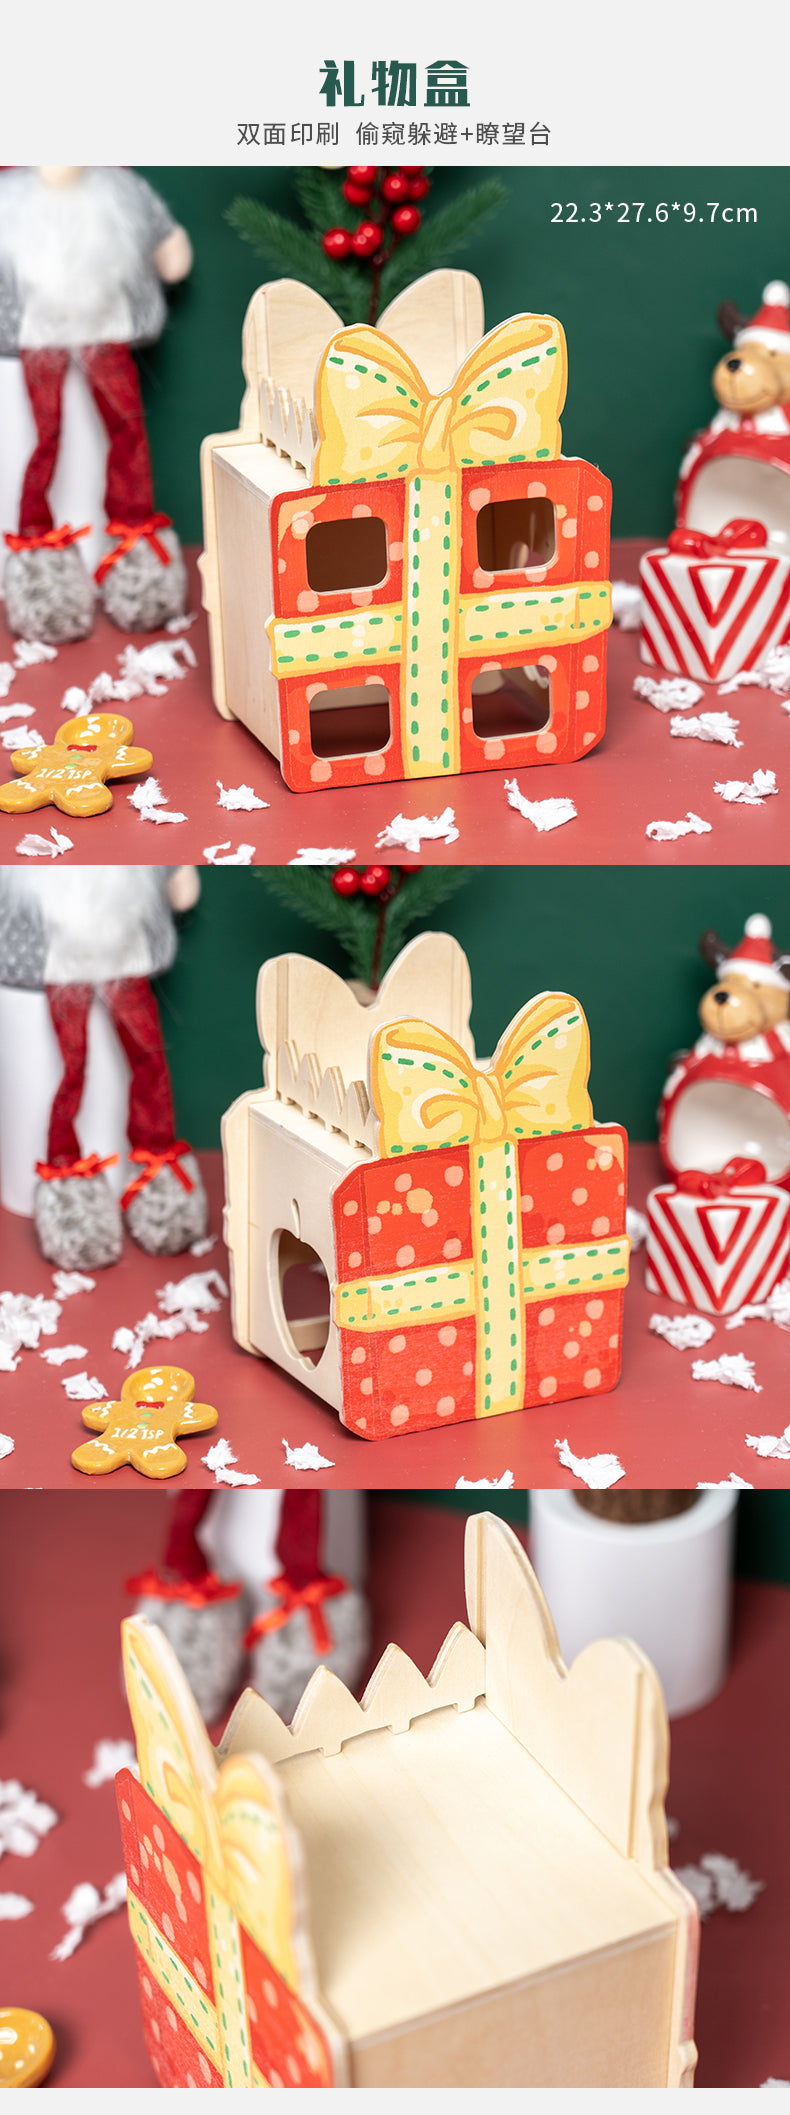 Cosmic Microwave Christmas themed set original handcrafted hamster Chamber House & Hideout & Ladder & flower arrangement.